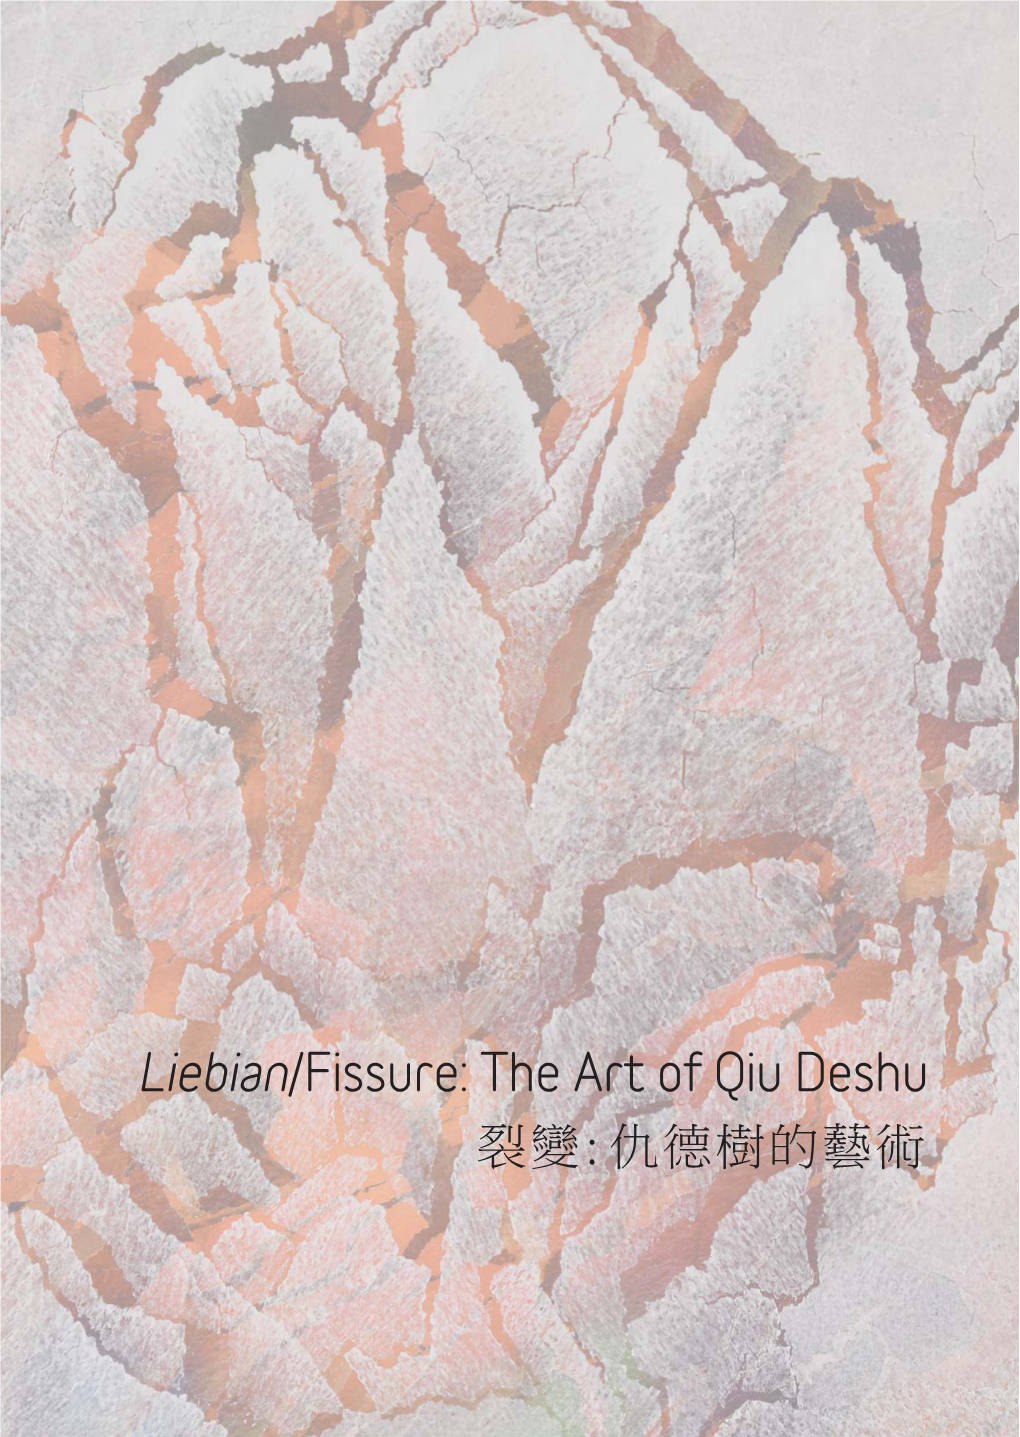 Liebian/Fissure: the Art of Qiu Deshu 裂變:仇德樹的藝術 Contents